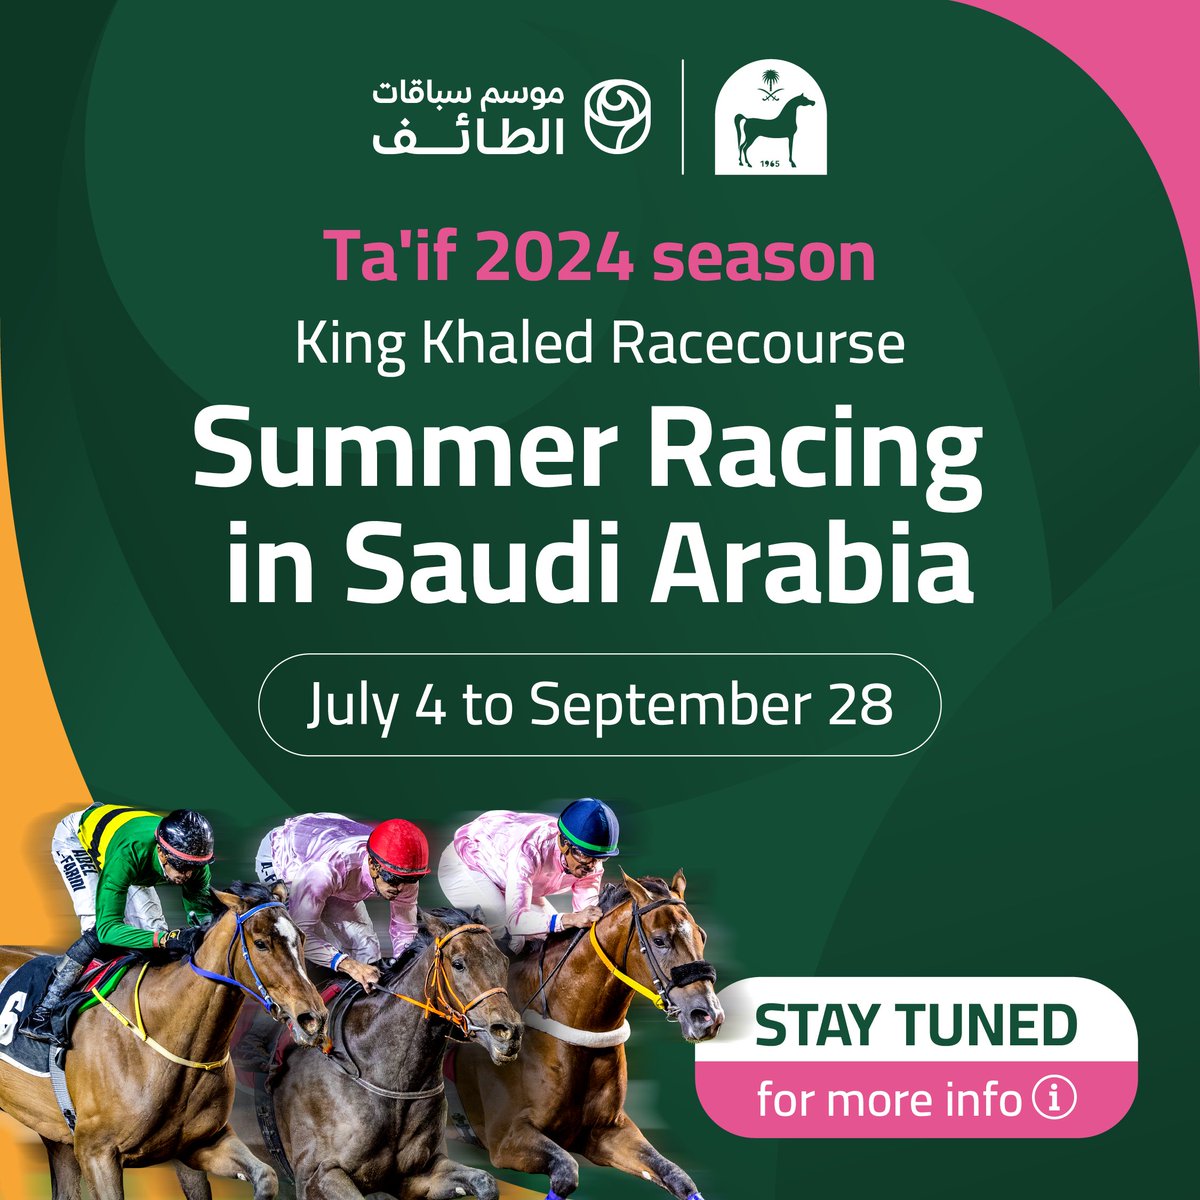 𝑪𝑶𝑵𝑭𝑰𝑹𝑴𝑬𝑫.

The 2024 Ta’if racing season will run from July 4 to September 28 at King Khaled Racecourse. 

#TaifSeason | #SaudiRacing